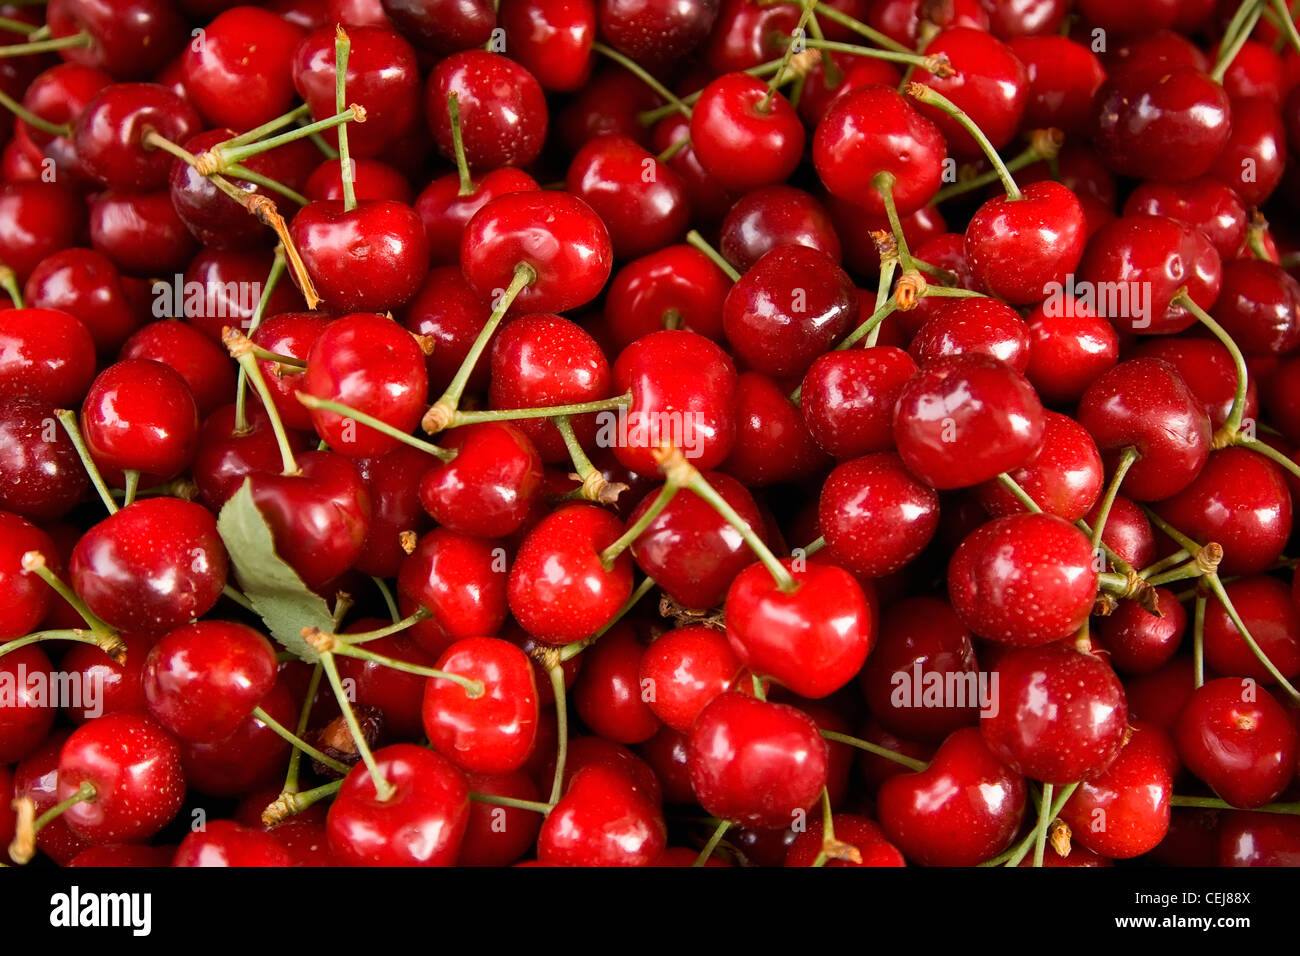 Agriculture - Mature harvested Bing cherries / Stockton, San Joaquin County, California, USA. Stock Photo